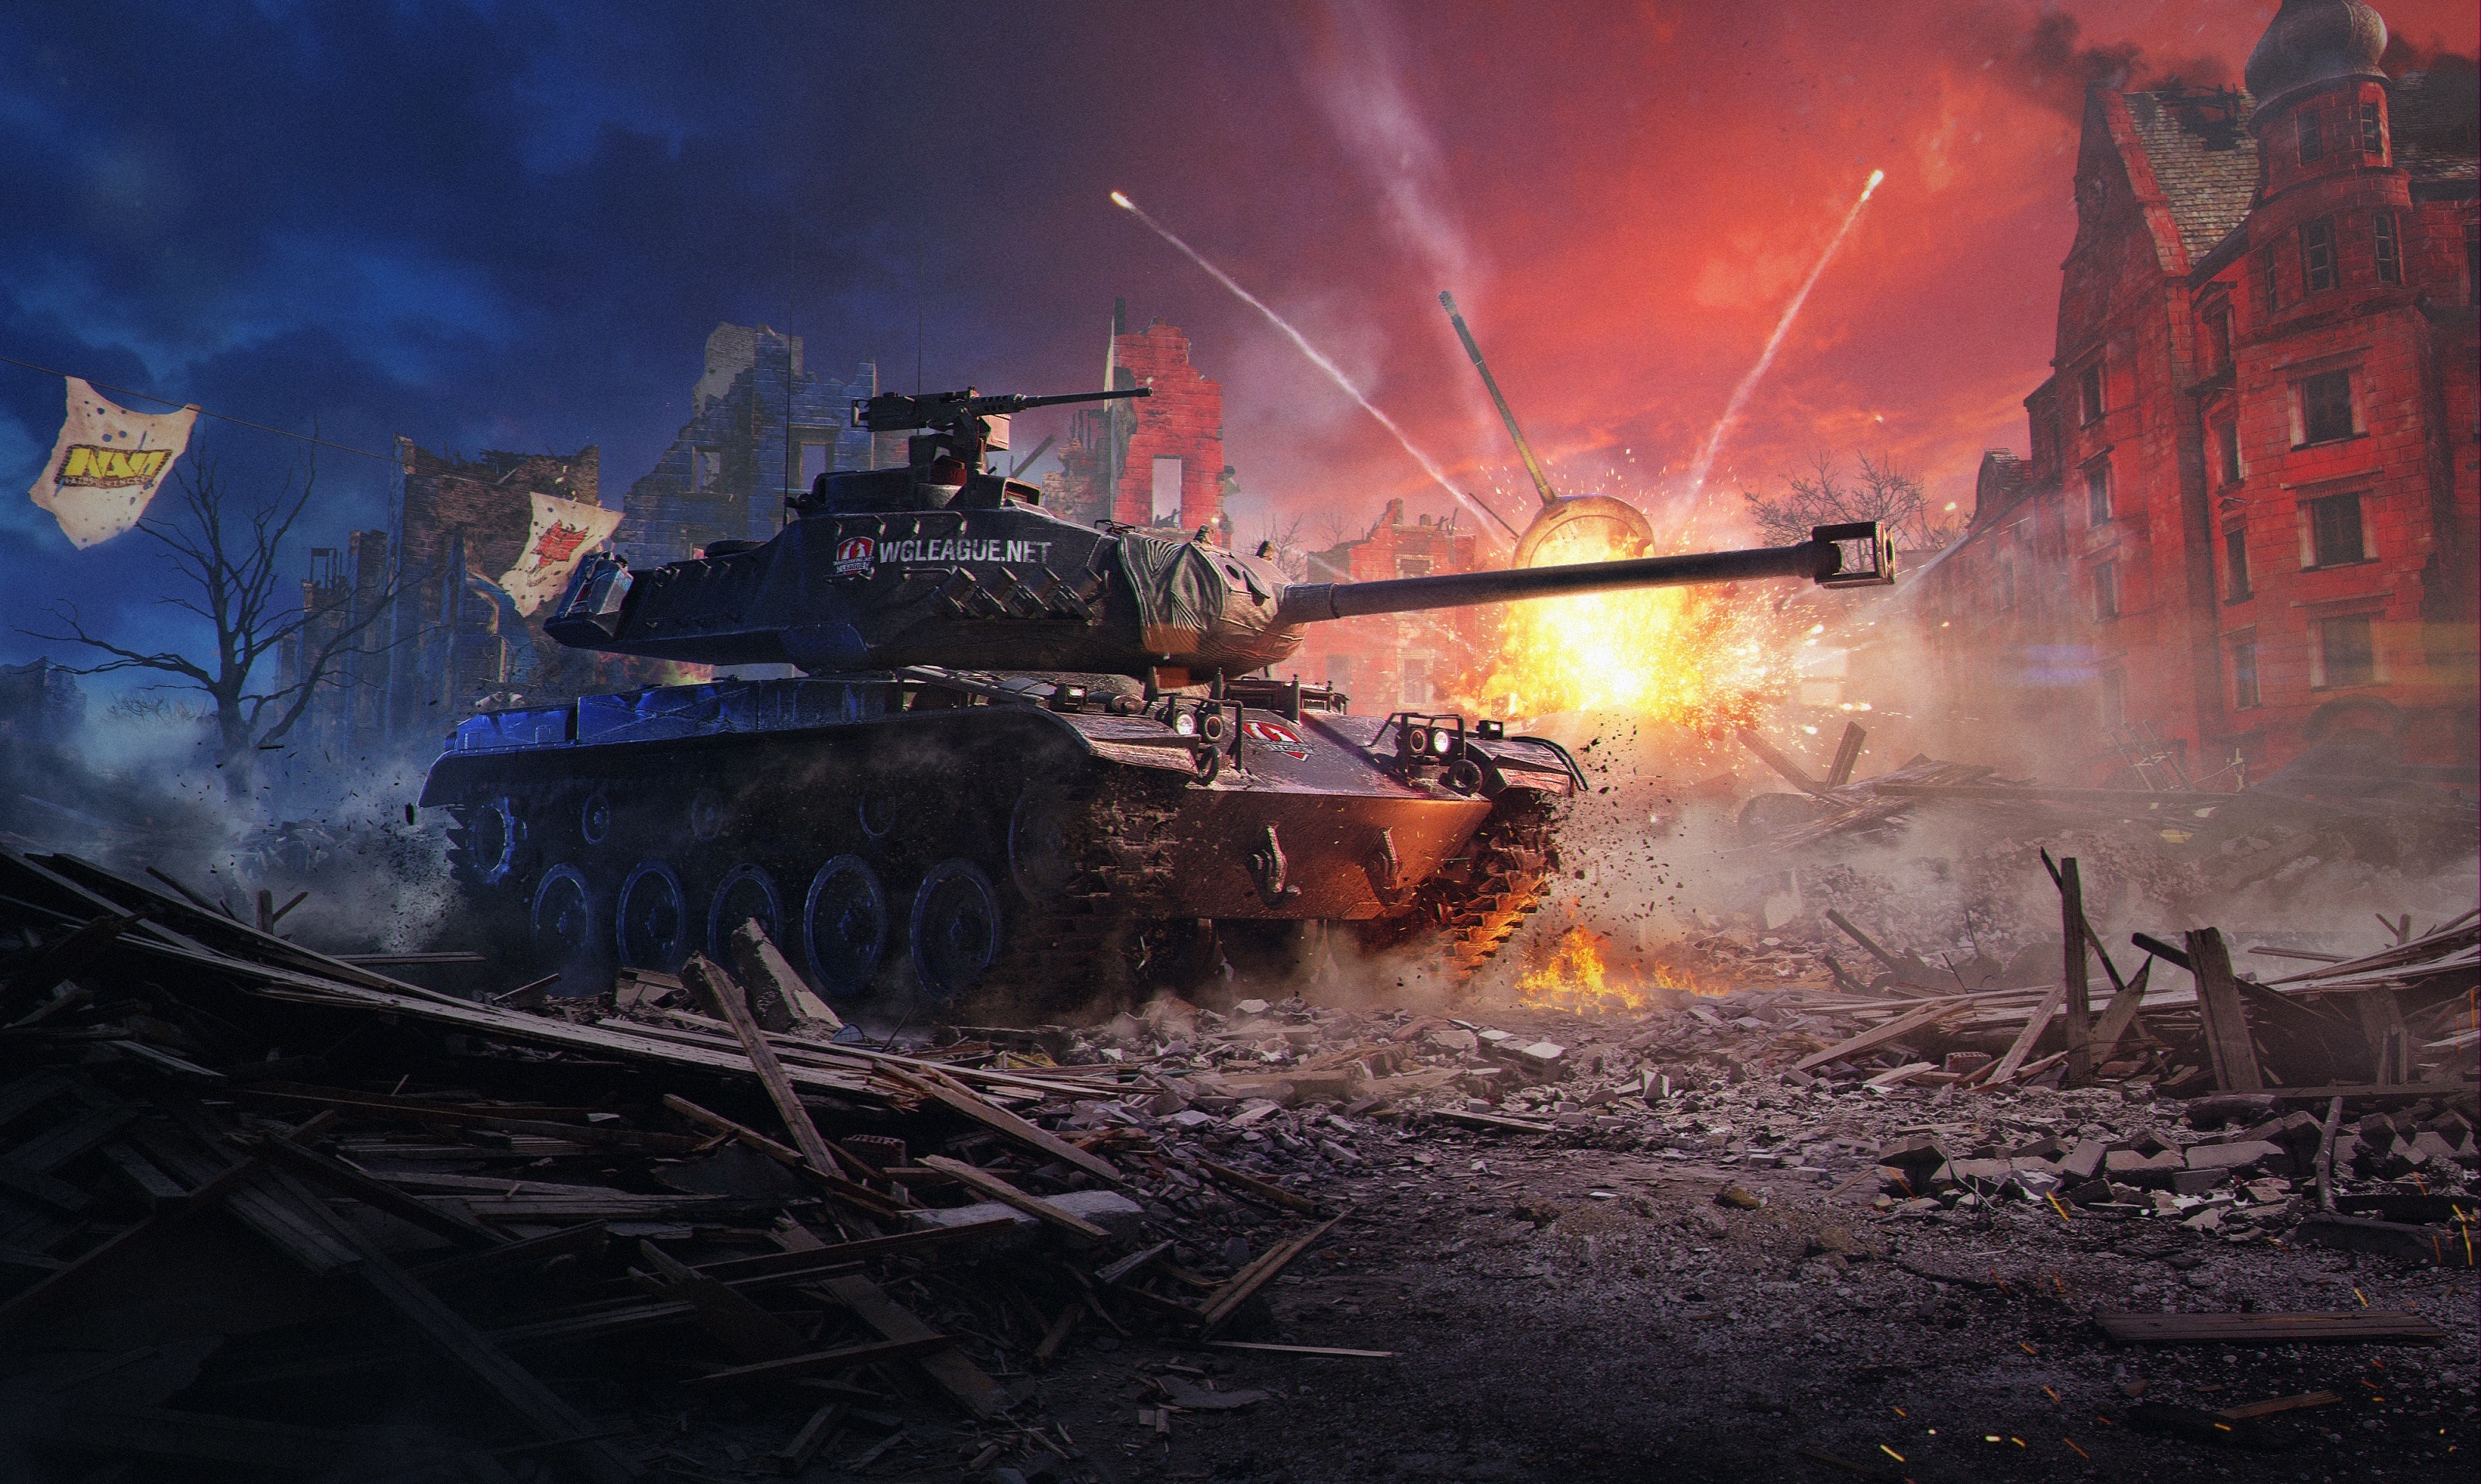 Wallpapers world of tanks war destructions on the desktop